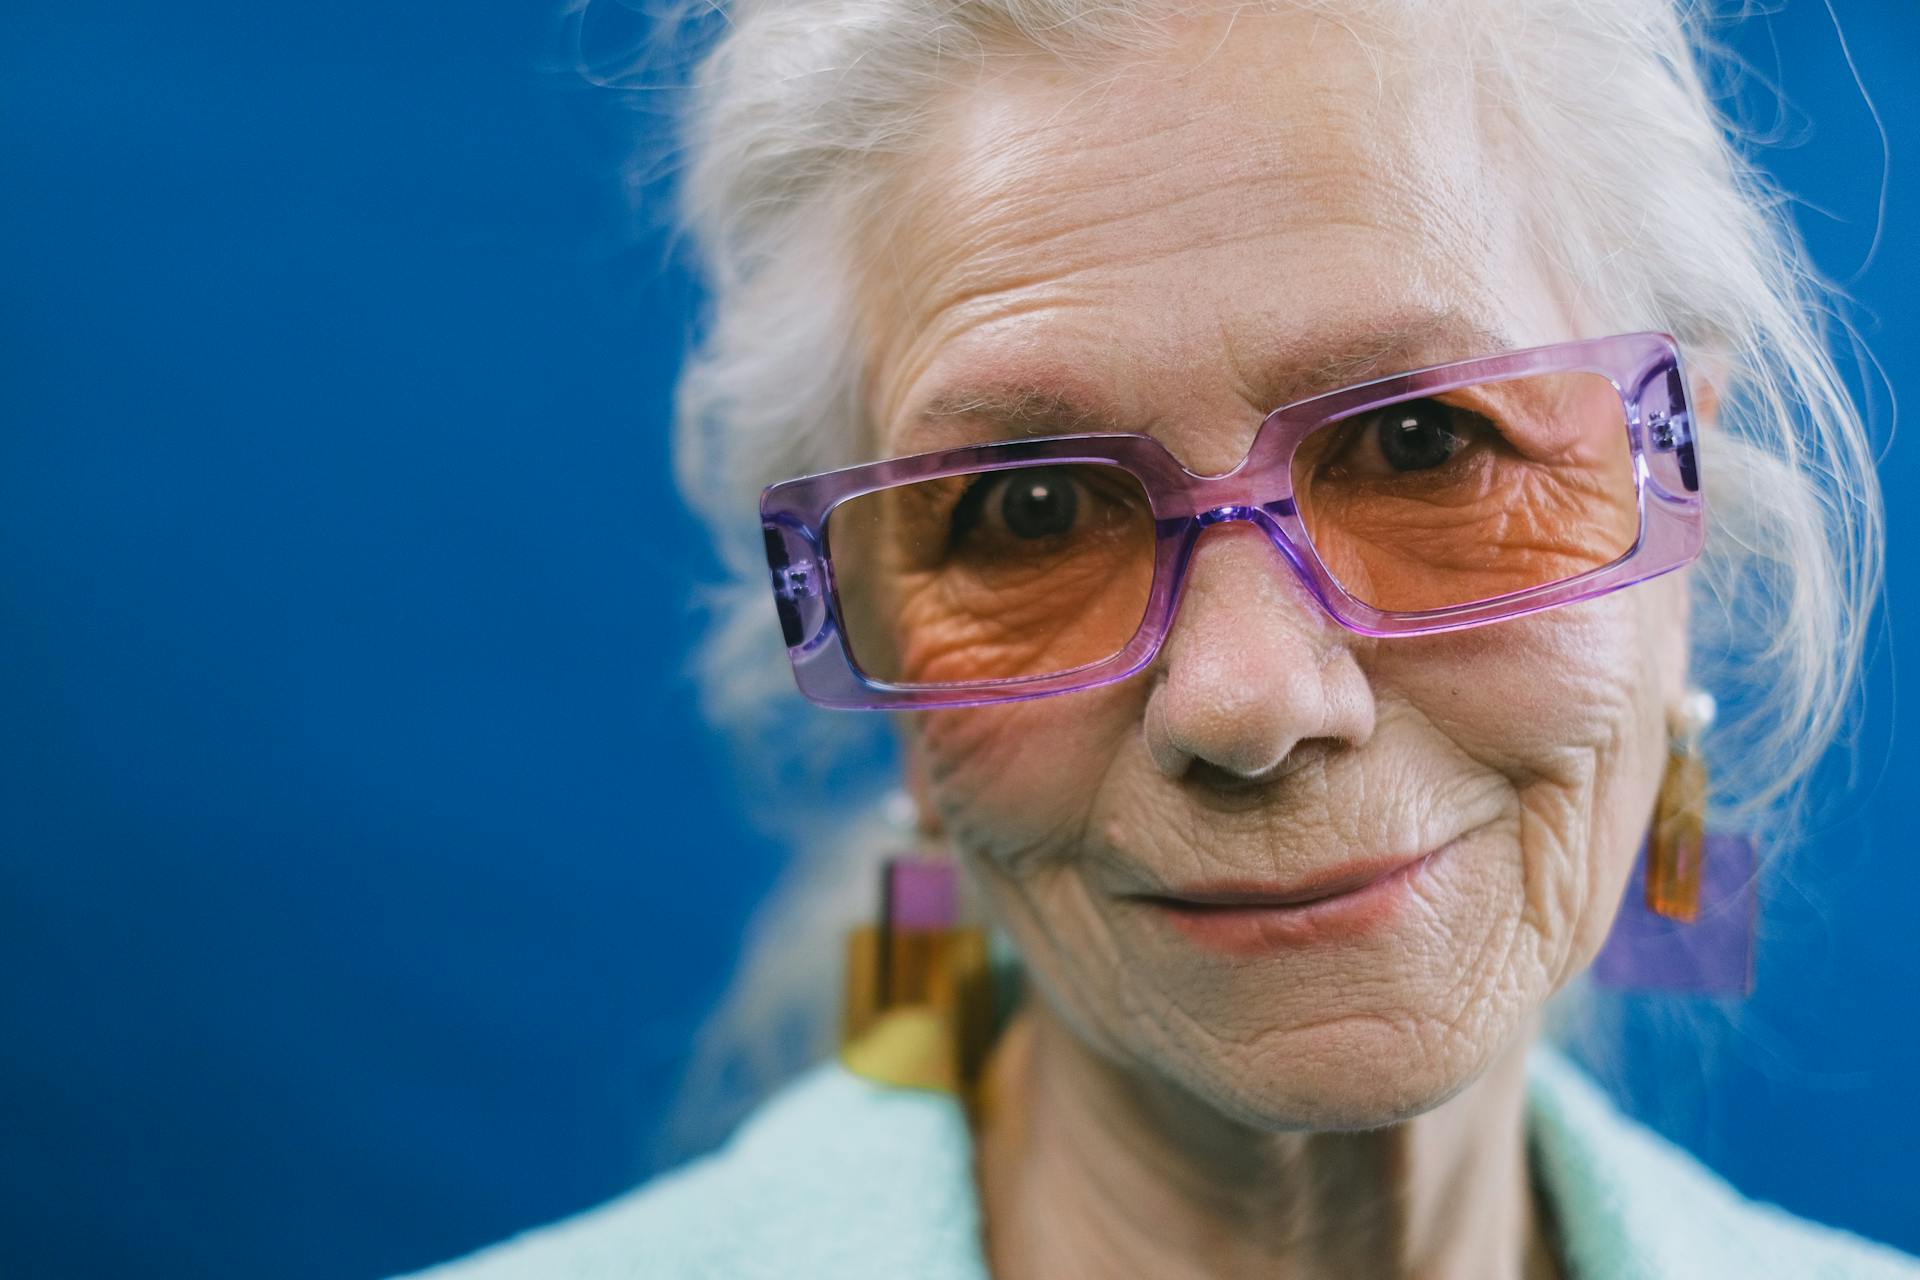 Smiling older woman | Source: Pexels